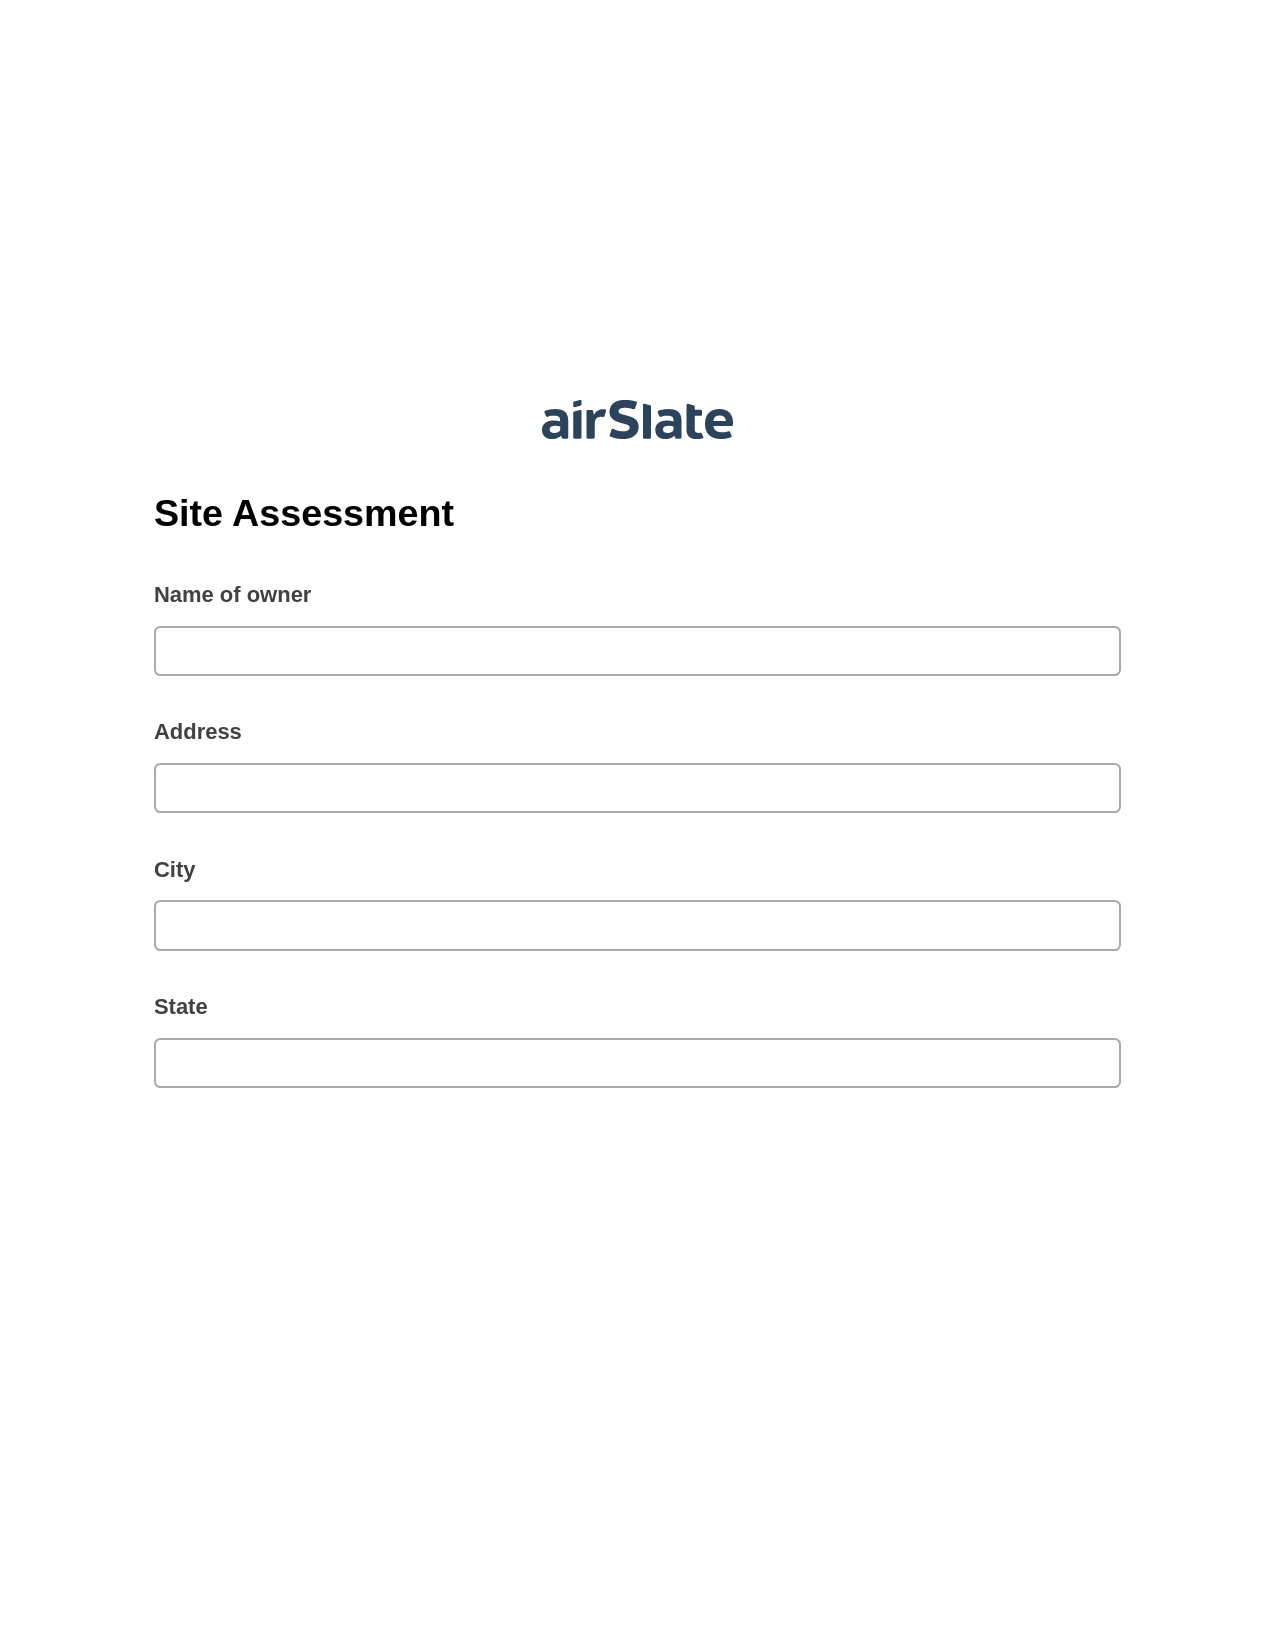 Site Assessment Pre-fill from CSV File Bot, Slack Notification Bot, Slack Two-Way Binding Bot